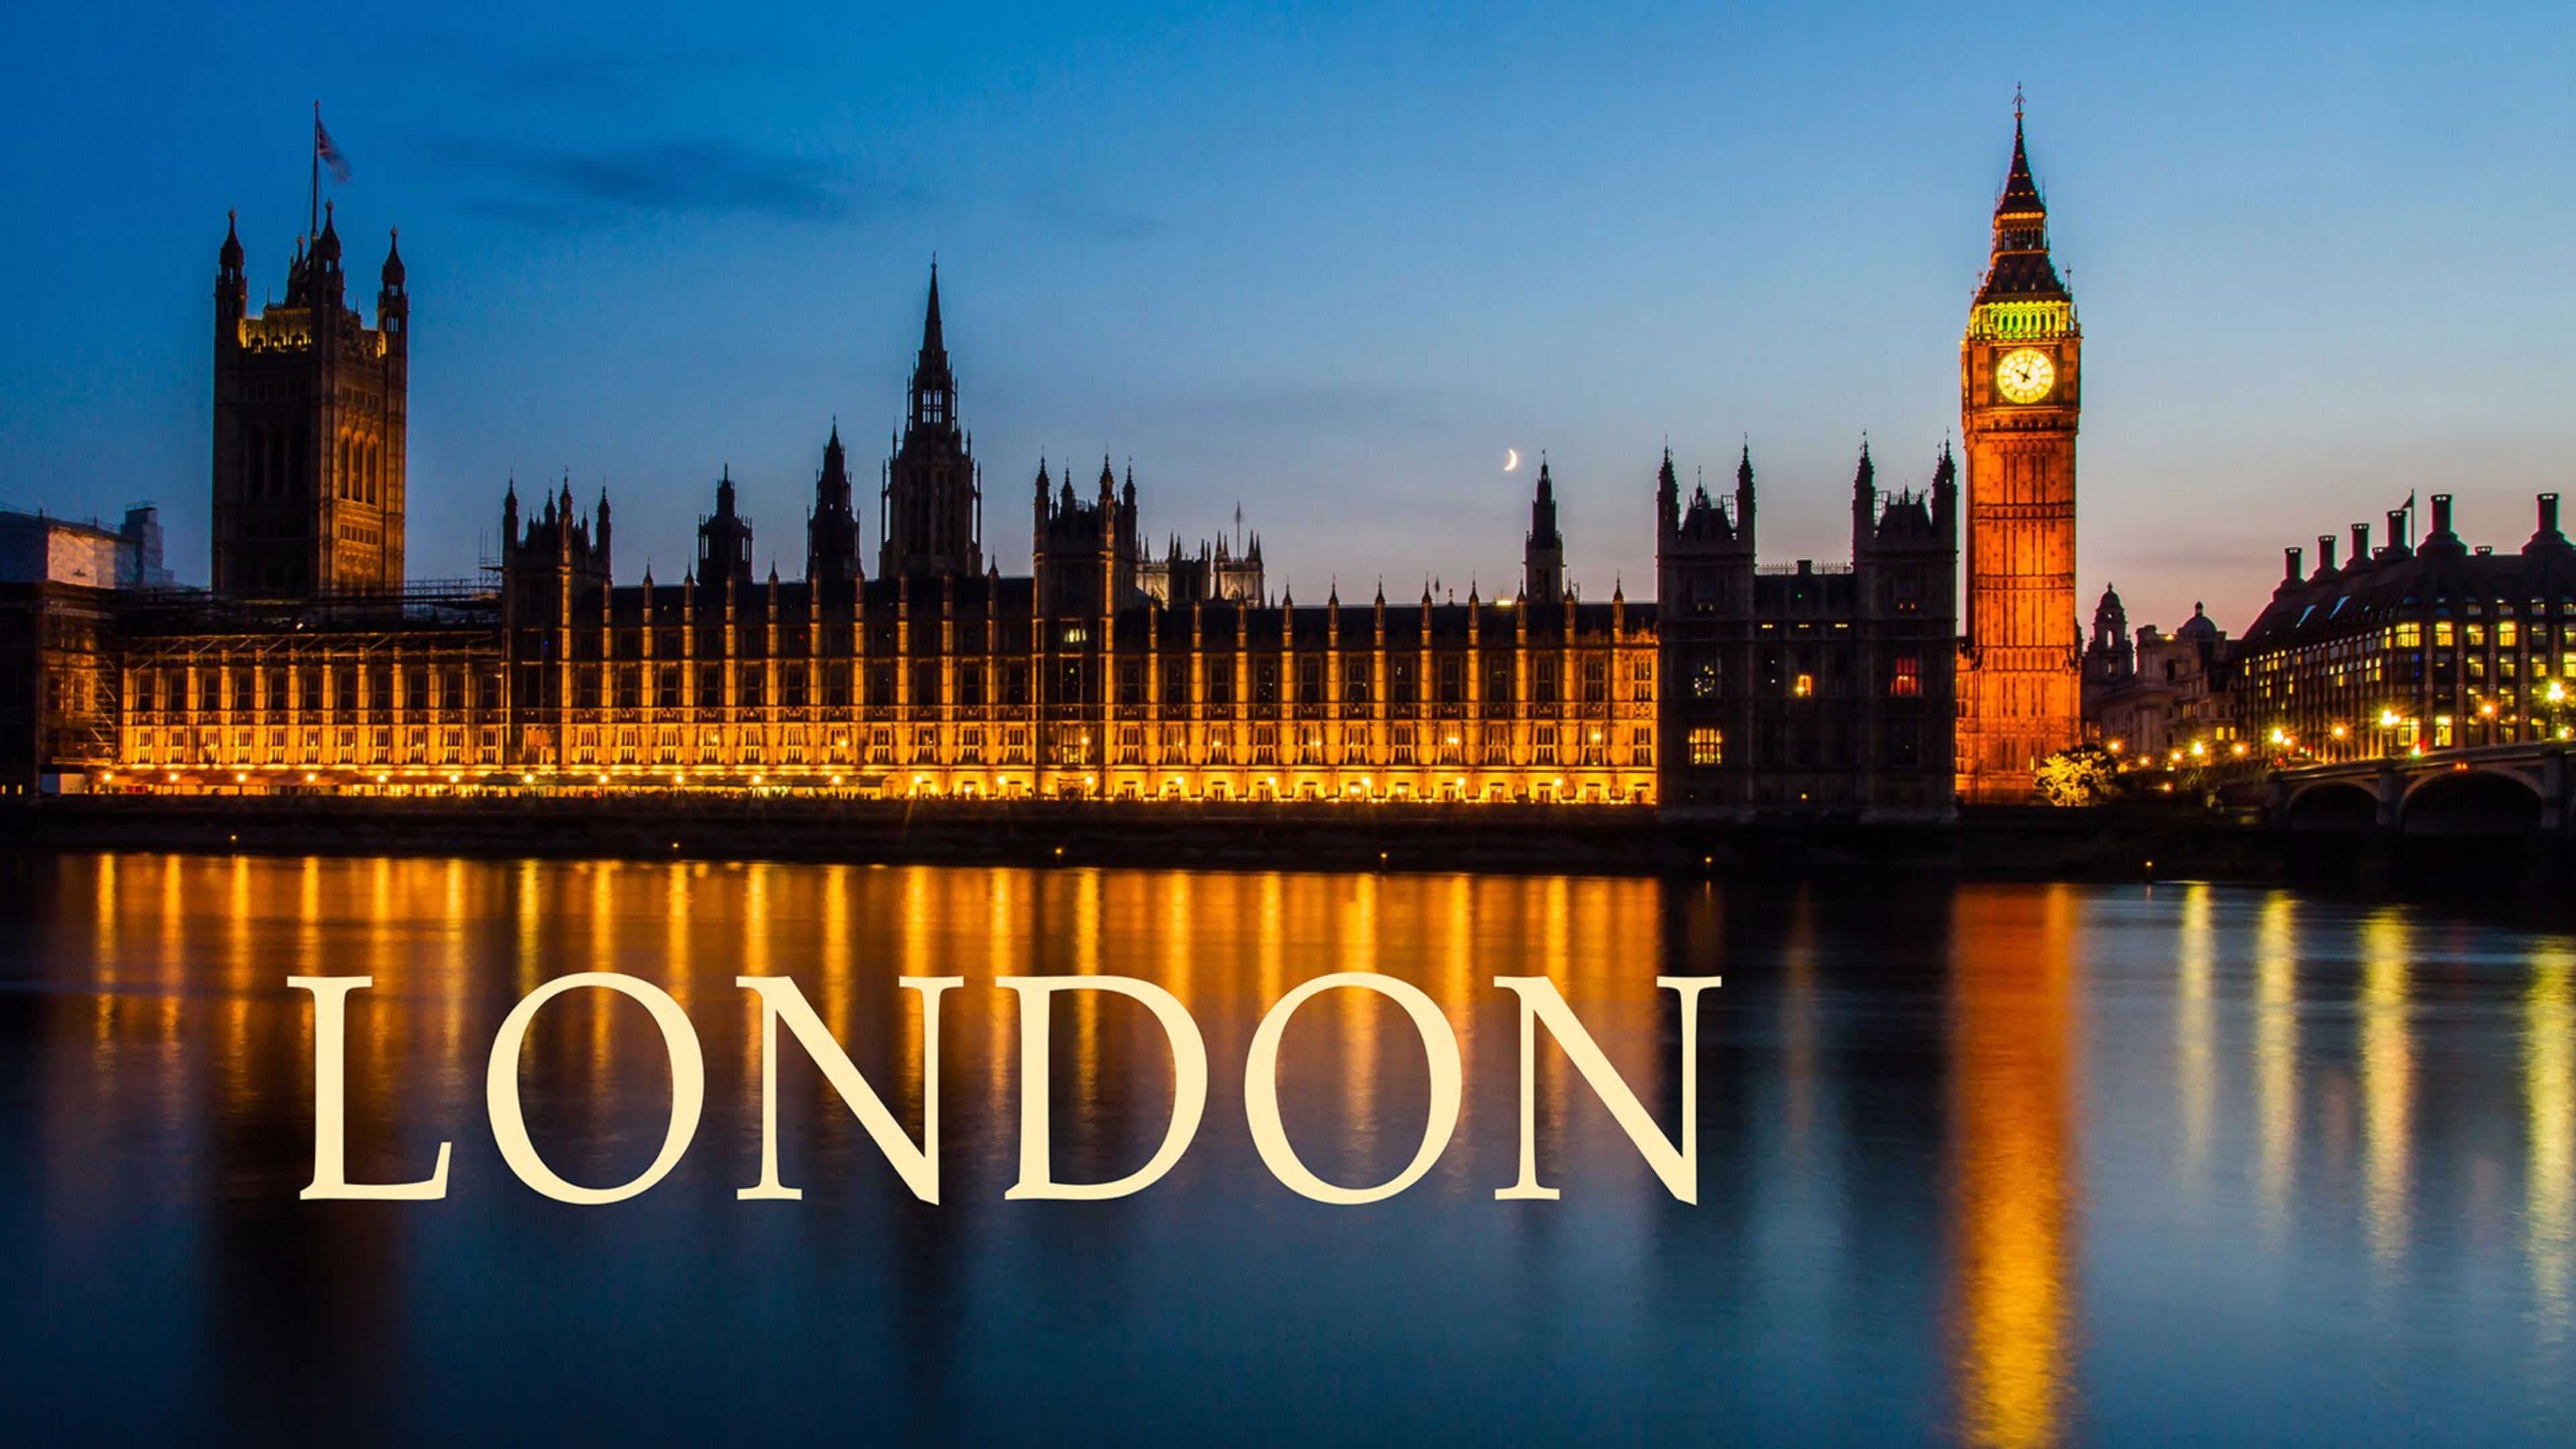 Big Ben 2016 London 4K Wallpaper Free 4K Wallpaper